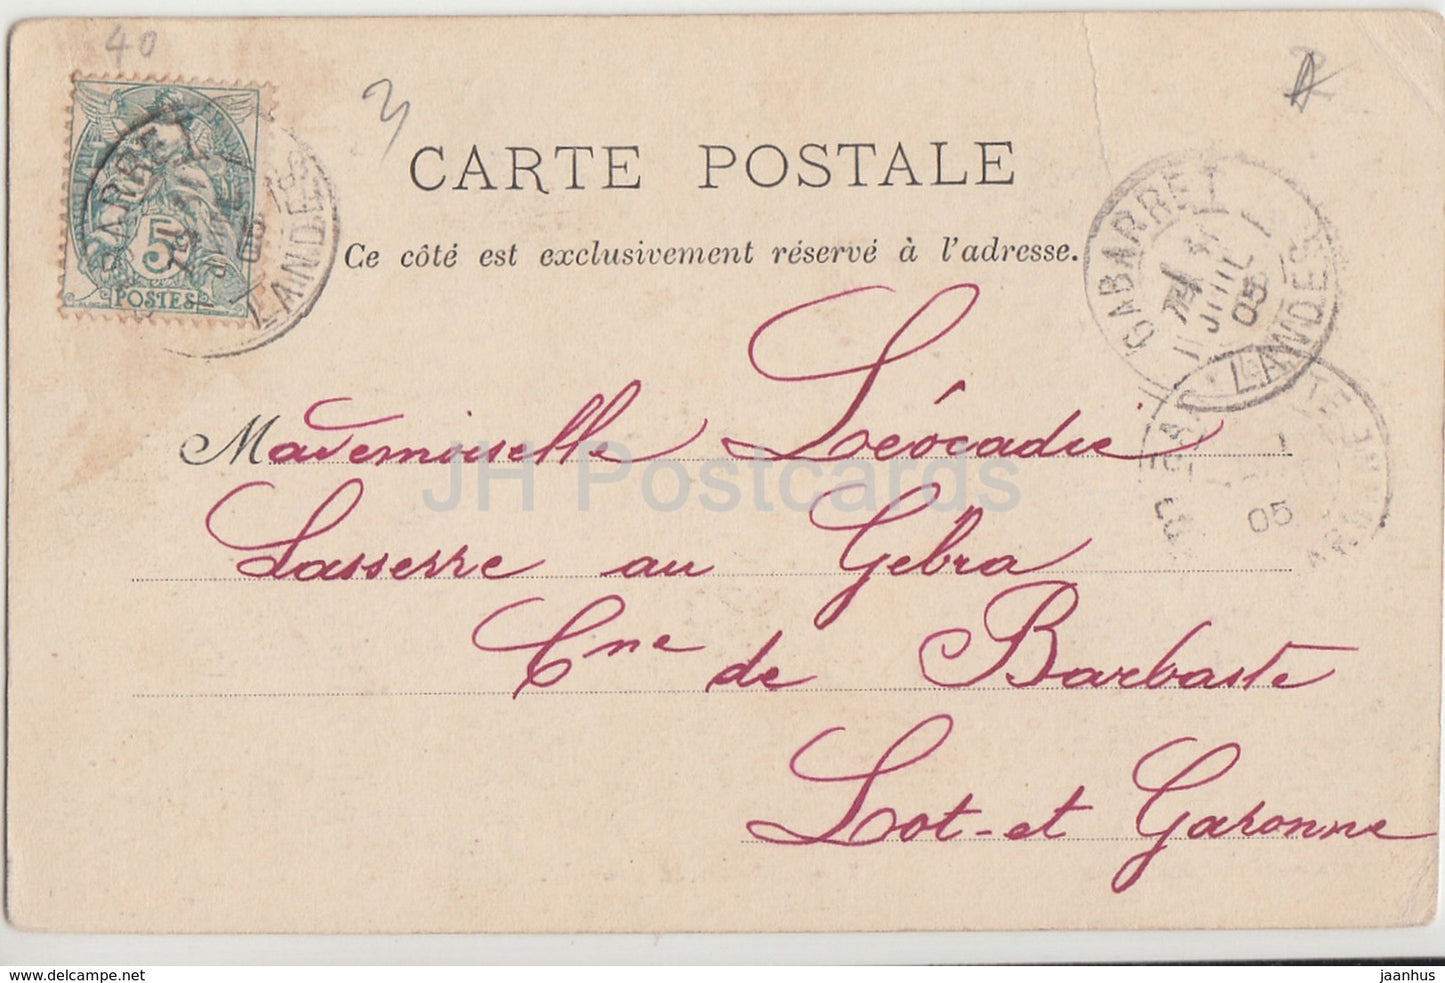 Chateau de Bournac - castle - 7 - 1905 - old postcard - France - used